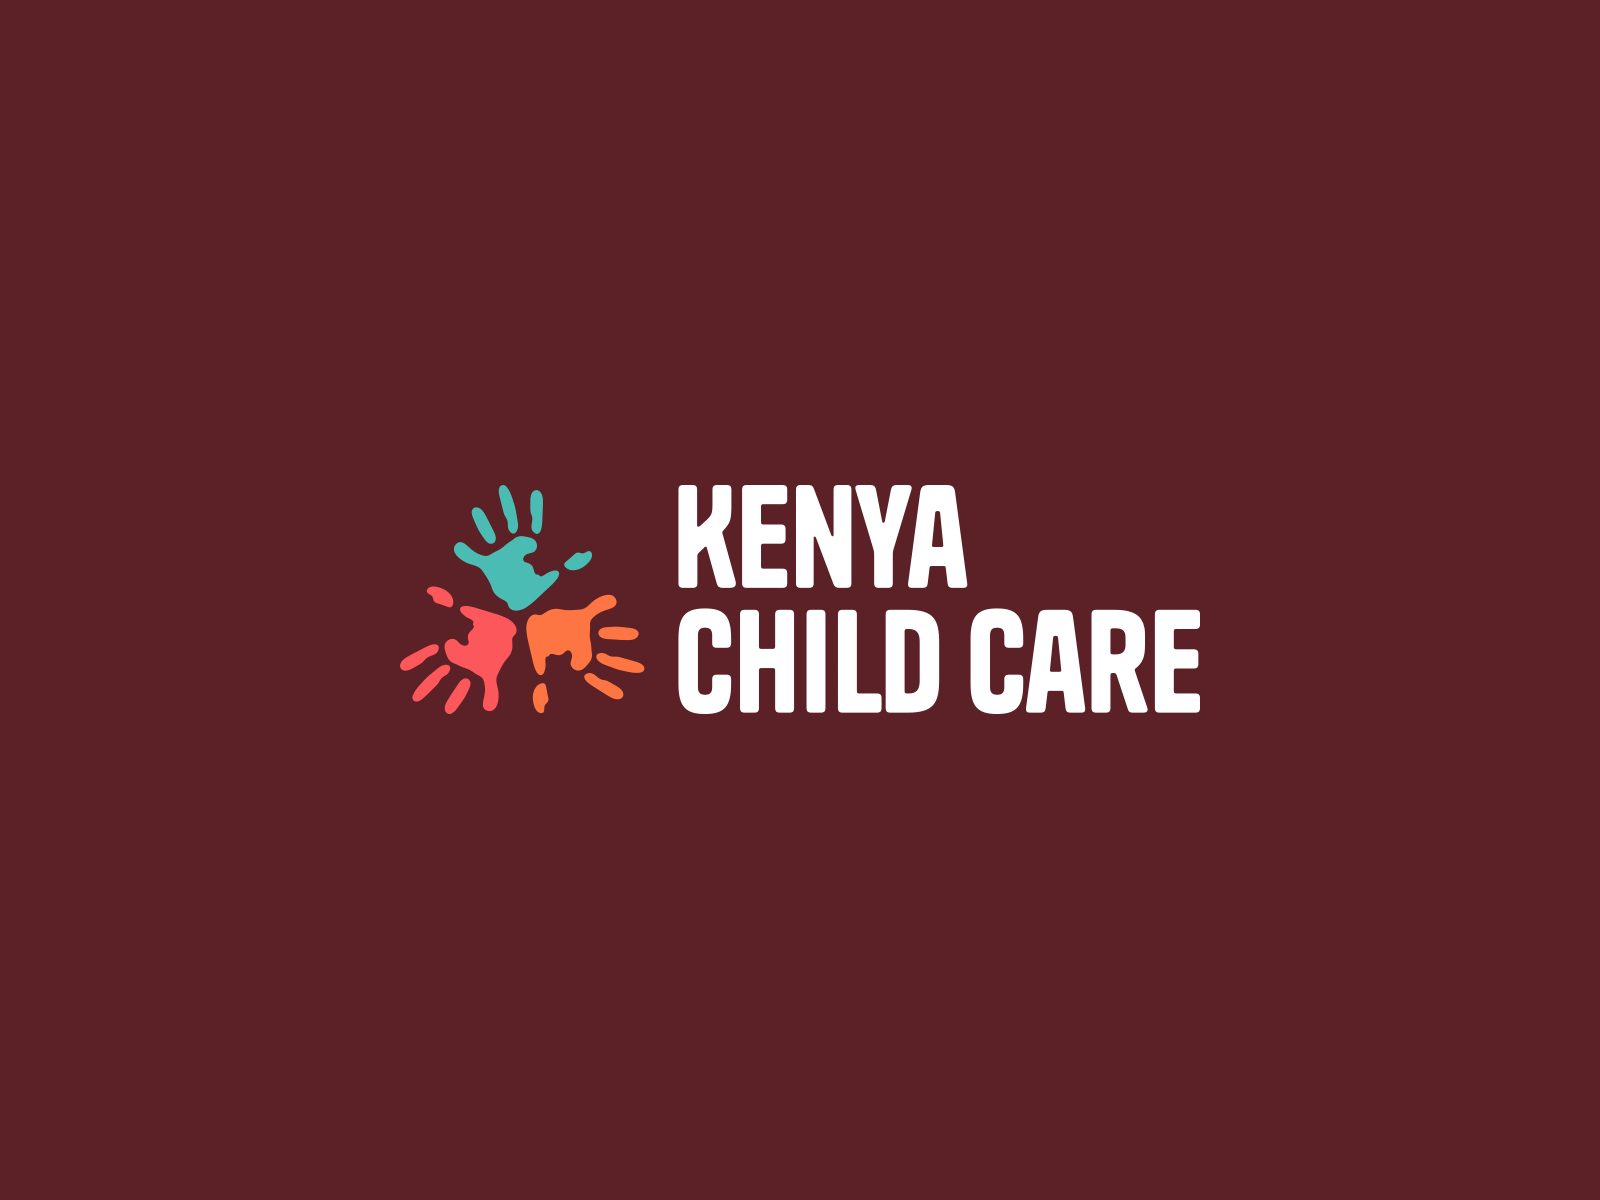 Kenya Child Care